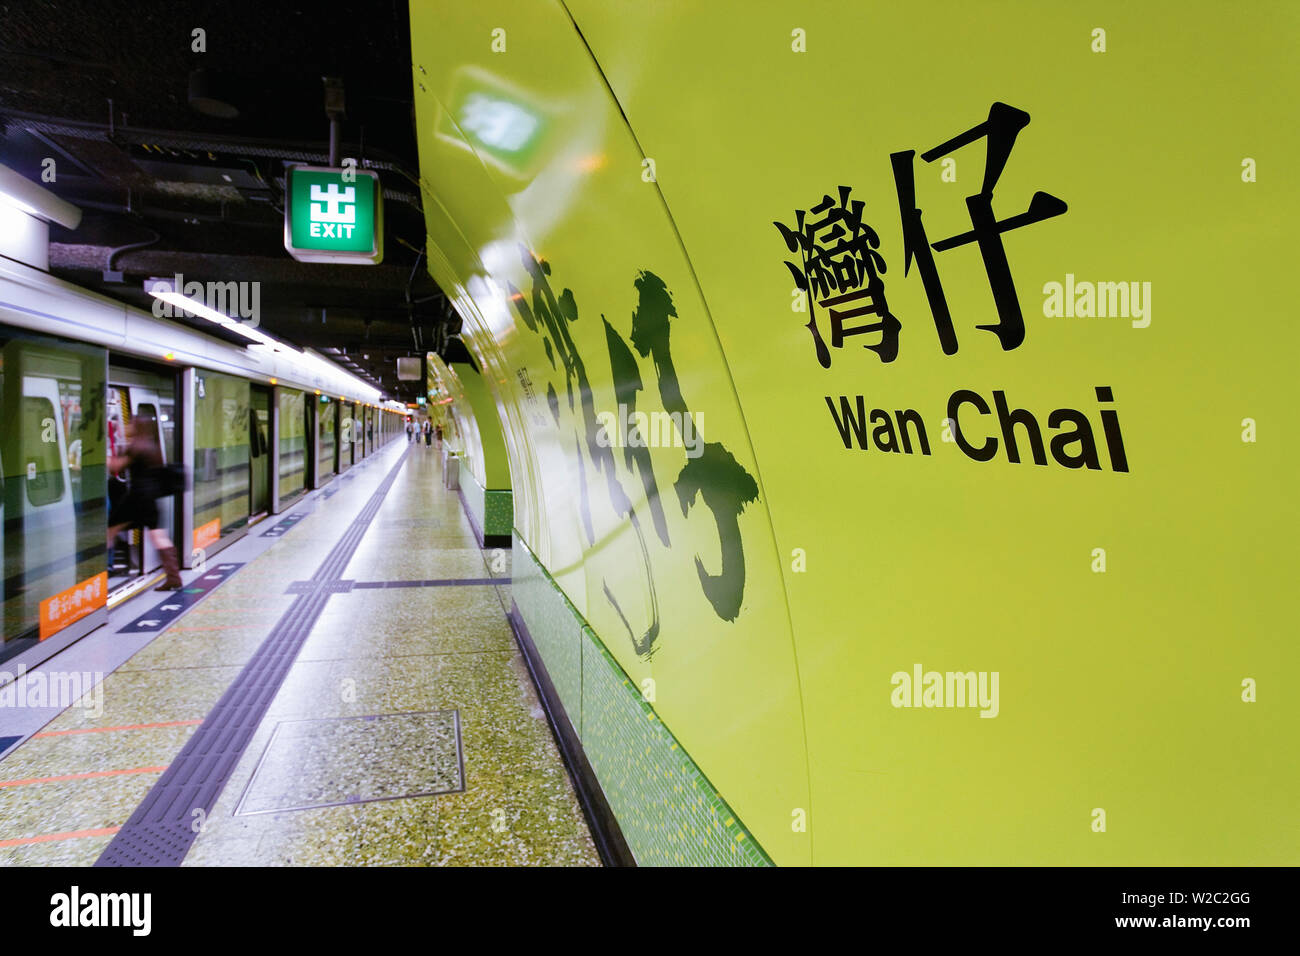 Asia, China, Hong Kong, Detail of Wan Chai station name in Hong Kong mass transit railway system (MTR) Stock Photo